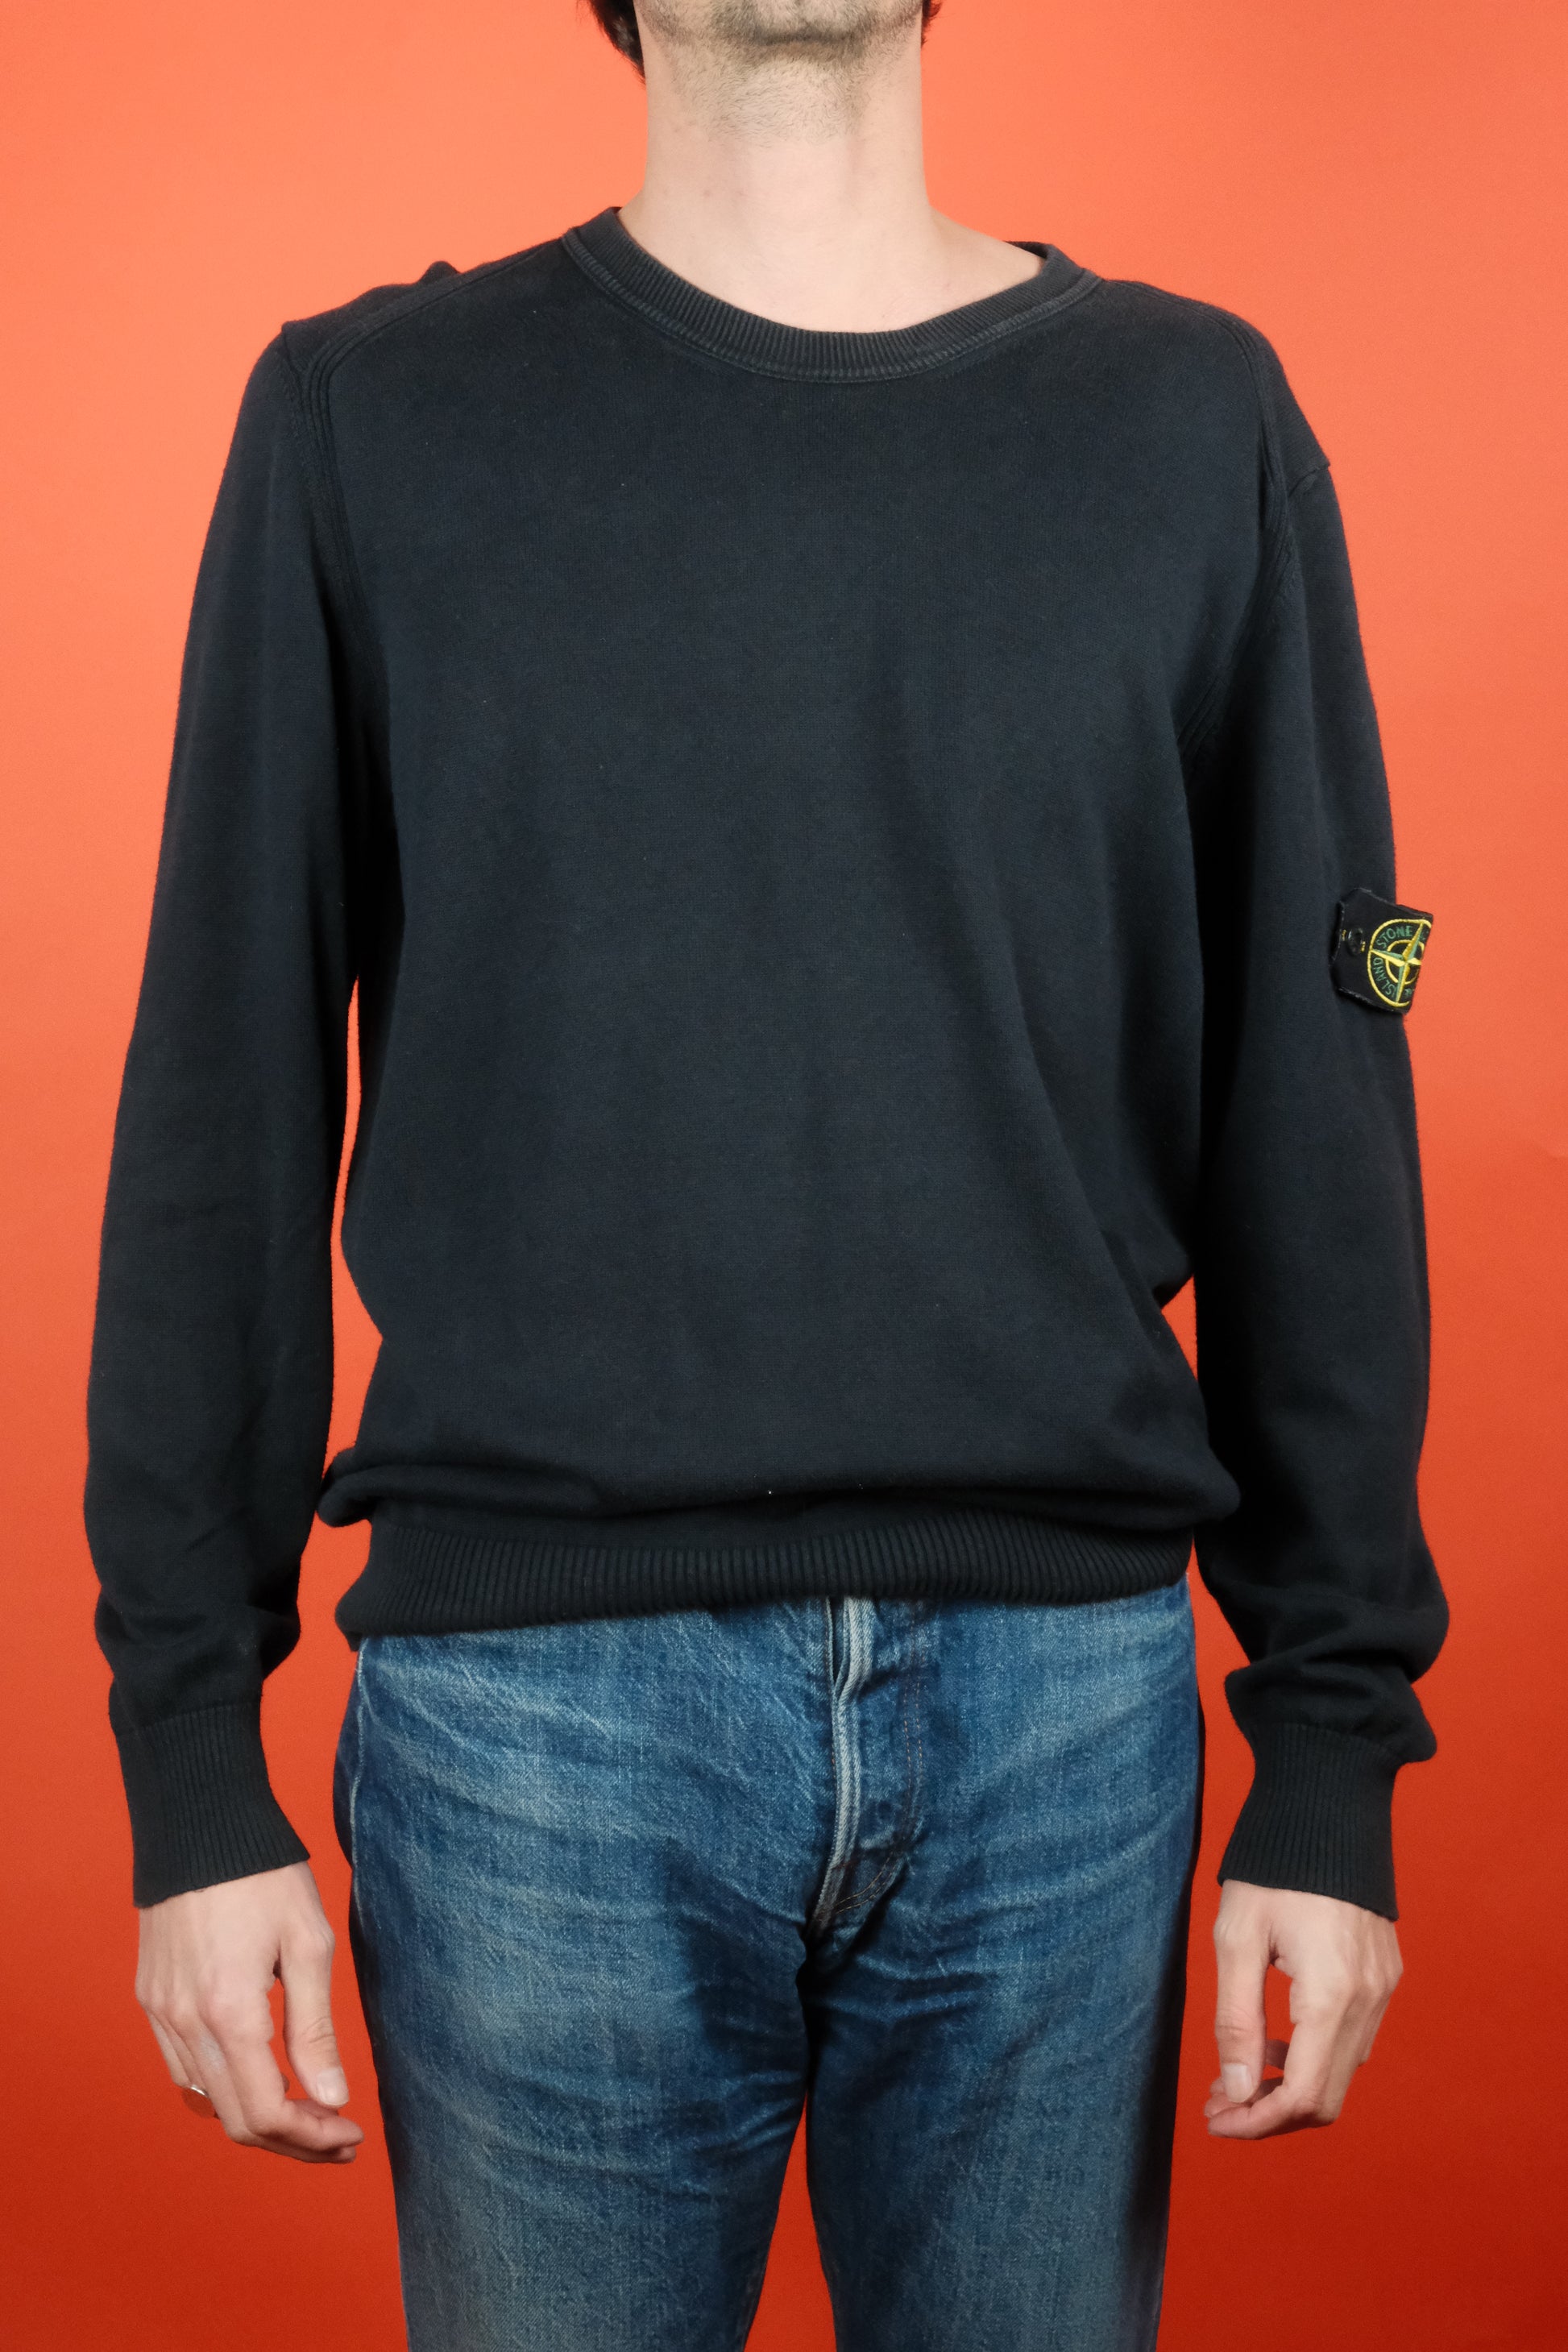 Stone Island Thin Sweater 'XL' - vintage clothing clochard92.com